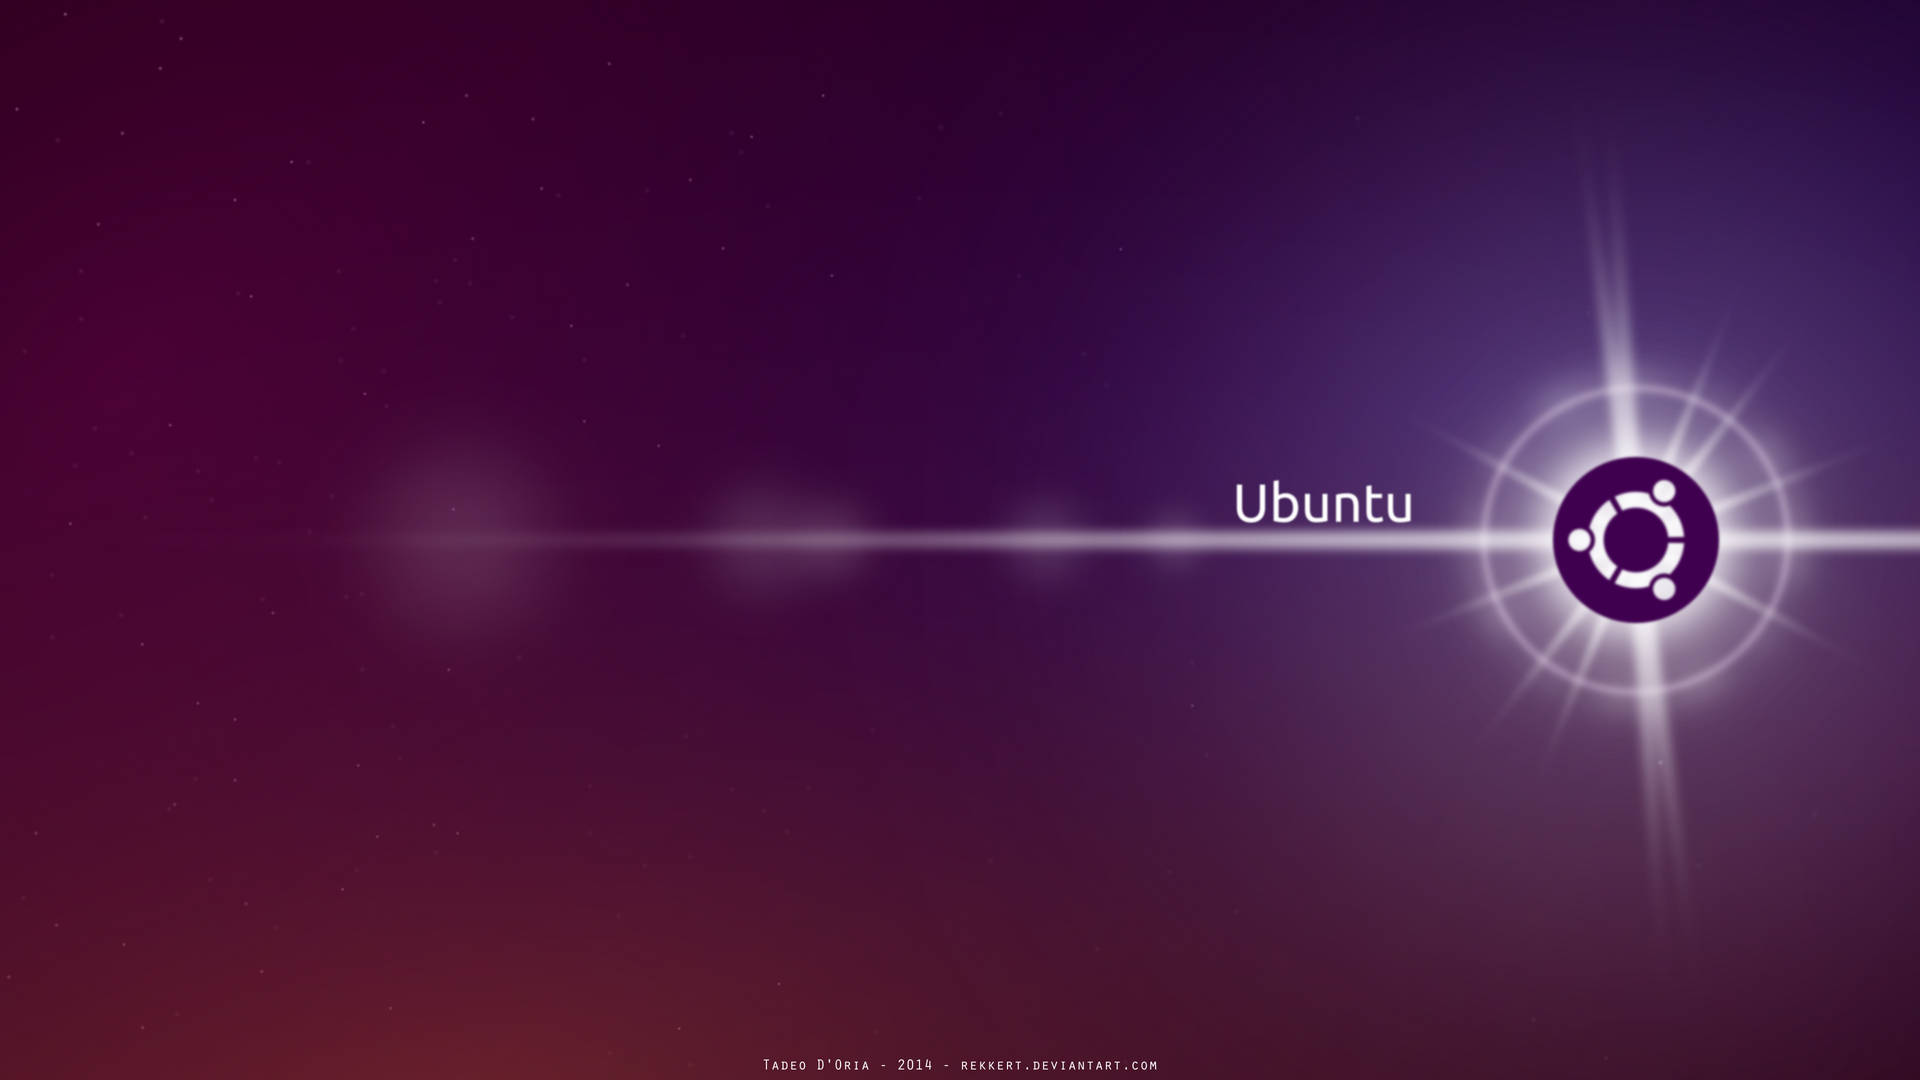 Ubuntu 3840X2160 Wallpaper and Background Image